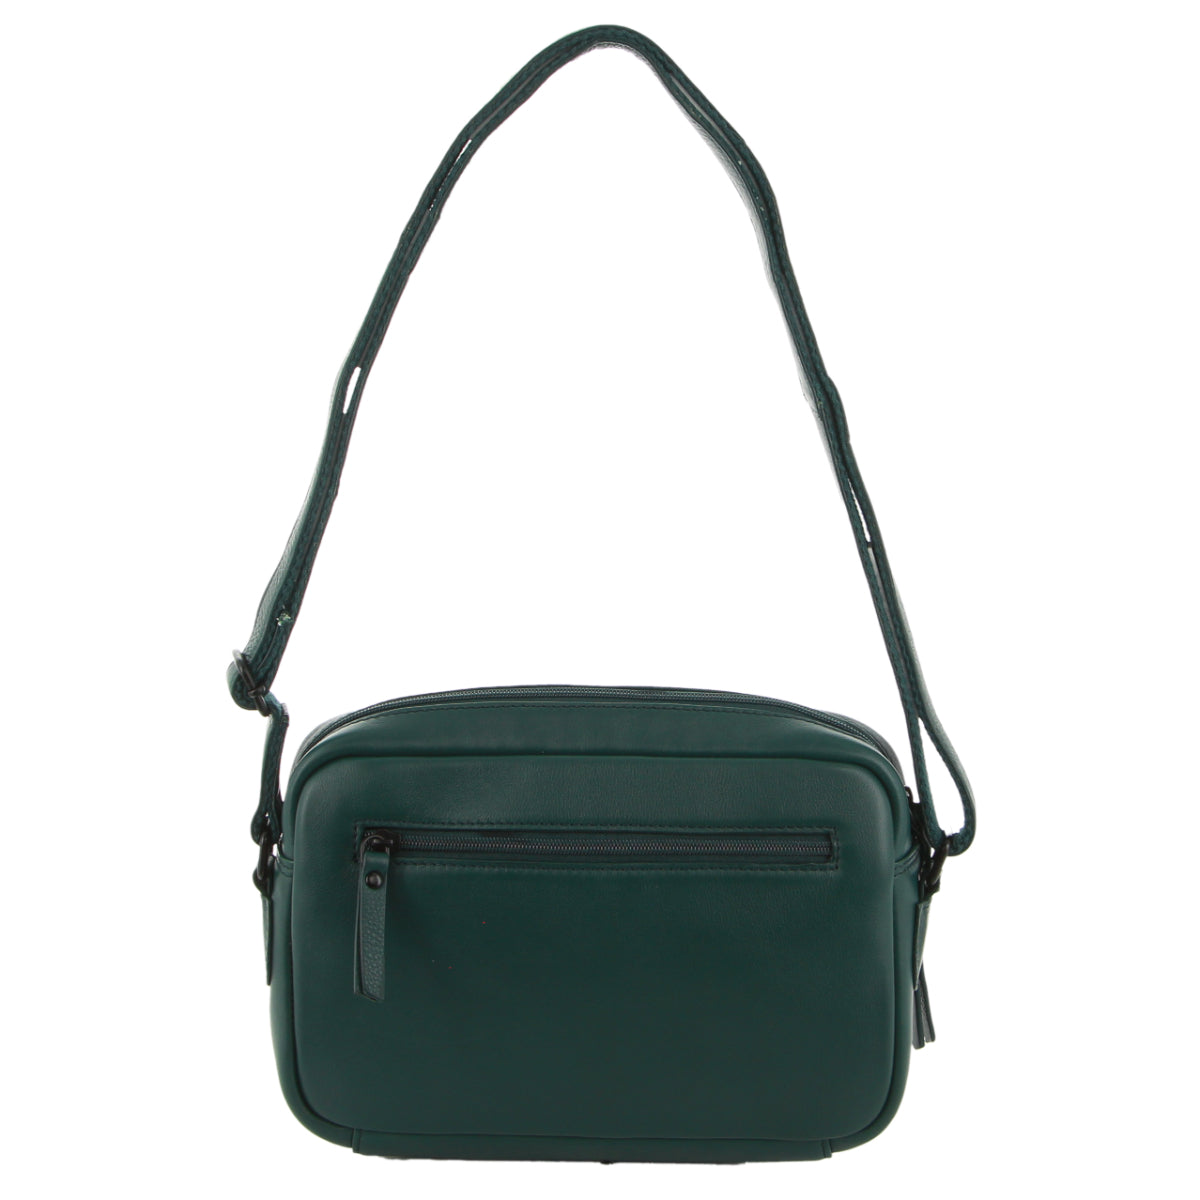 Milleni - NL3871 Small leather sidebag - Zircon-2